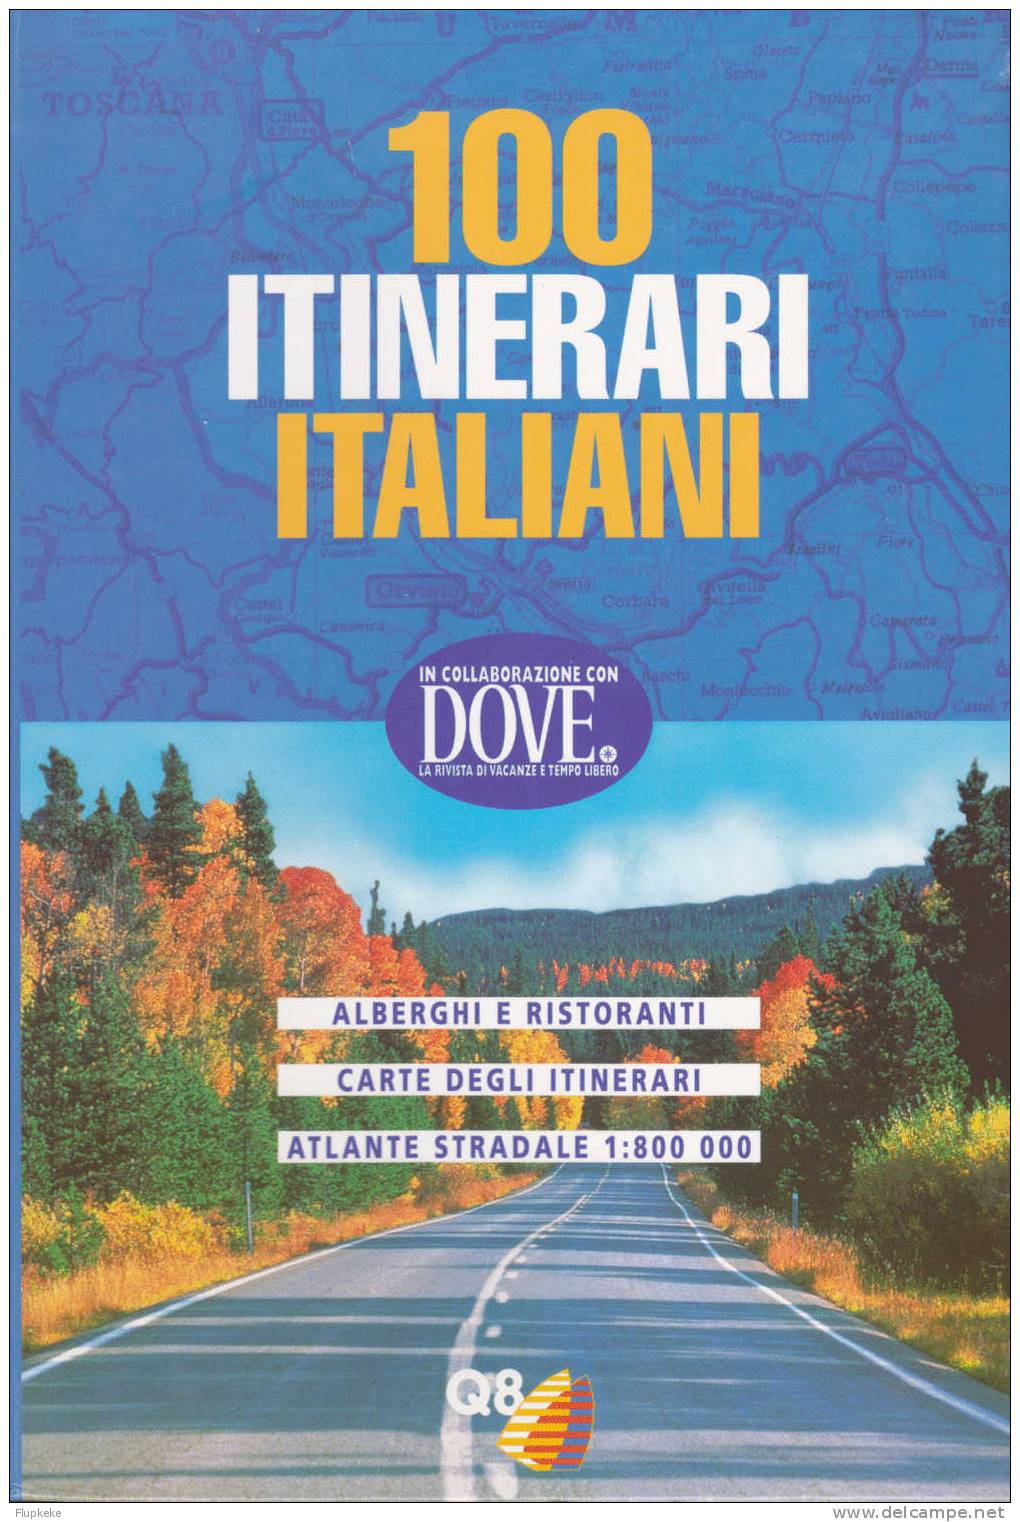 100 Itinerari Italiani Q8 Dove 1996 - Tourisme, Voyages